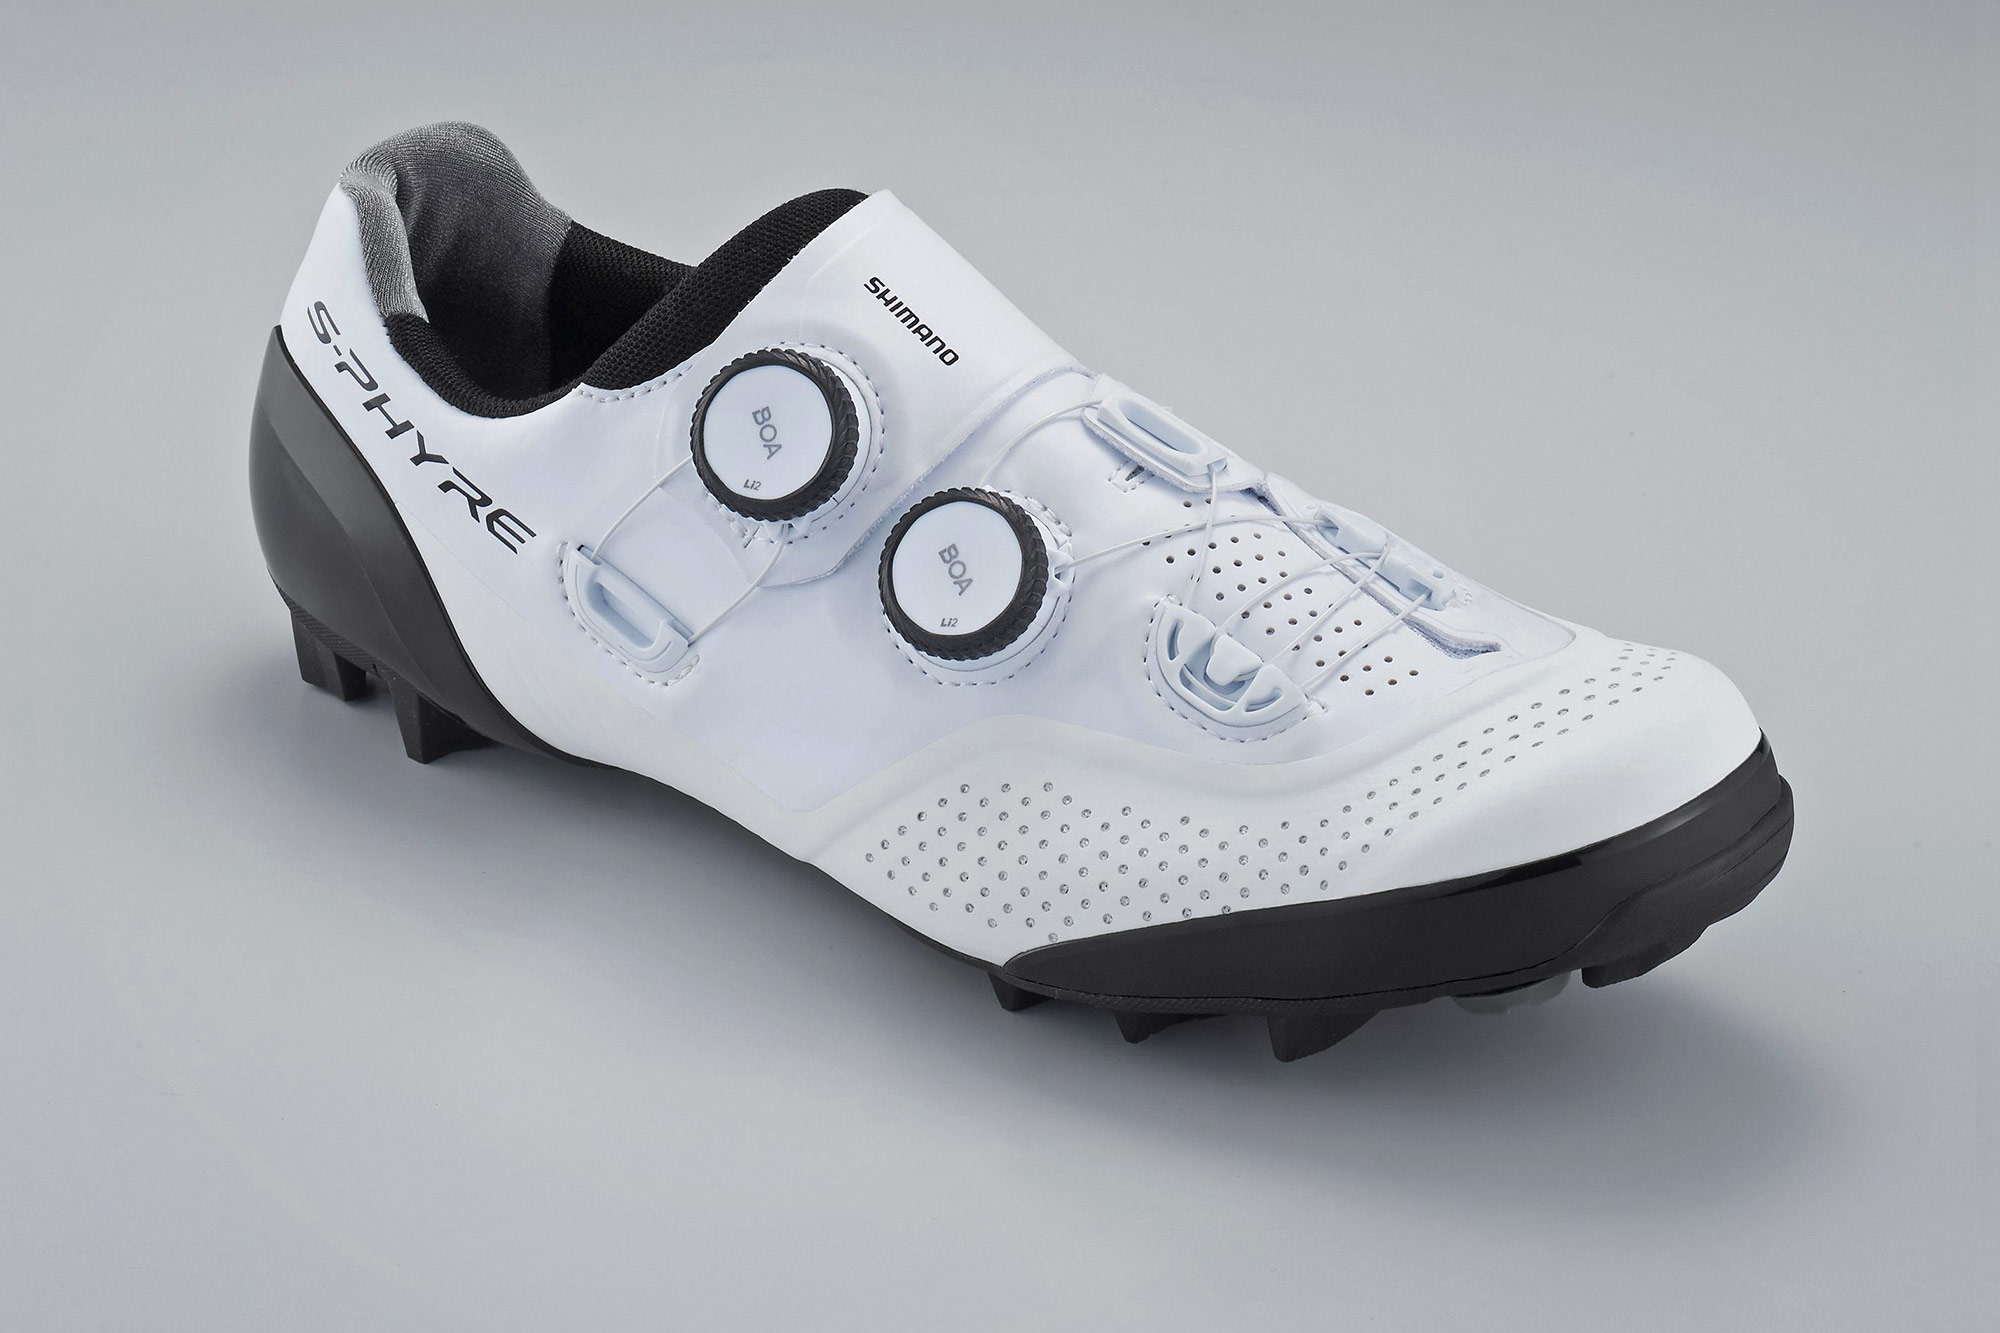 Shimano S-Phyre XC902 MTB shoes, next-gen XC9 cross-country mountain bike shoe, angled